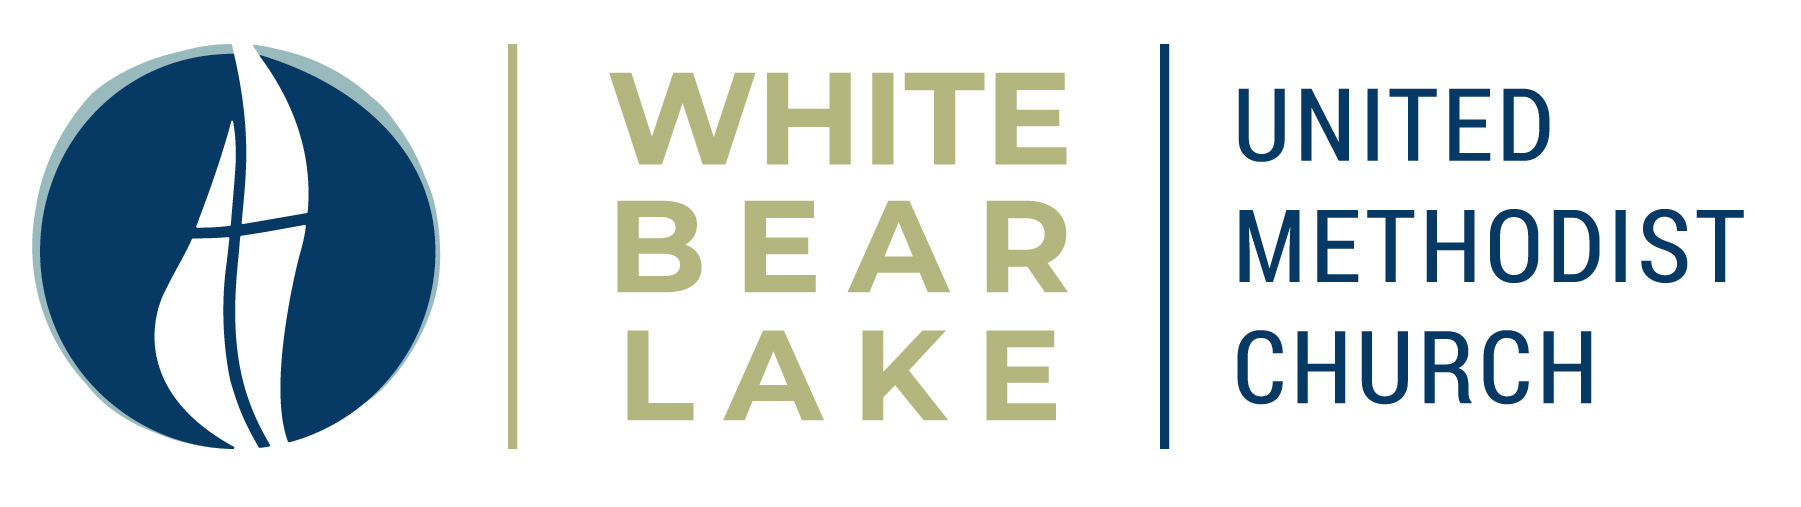 White Bear Lake United Methodist Church